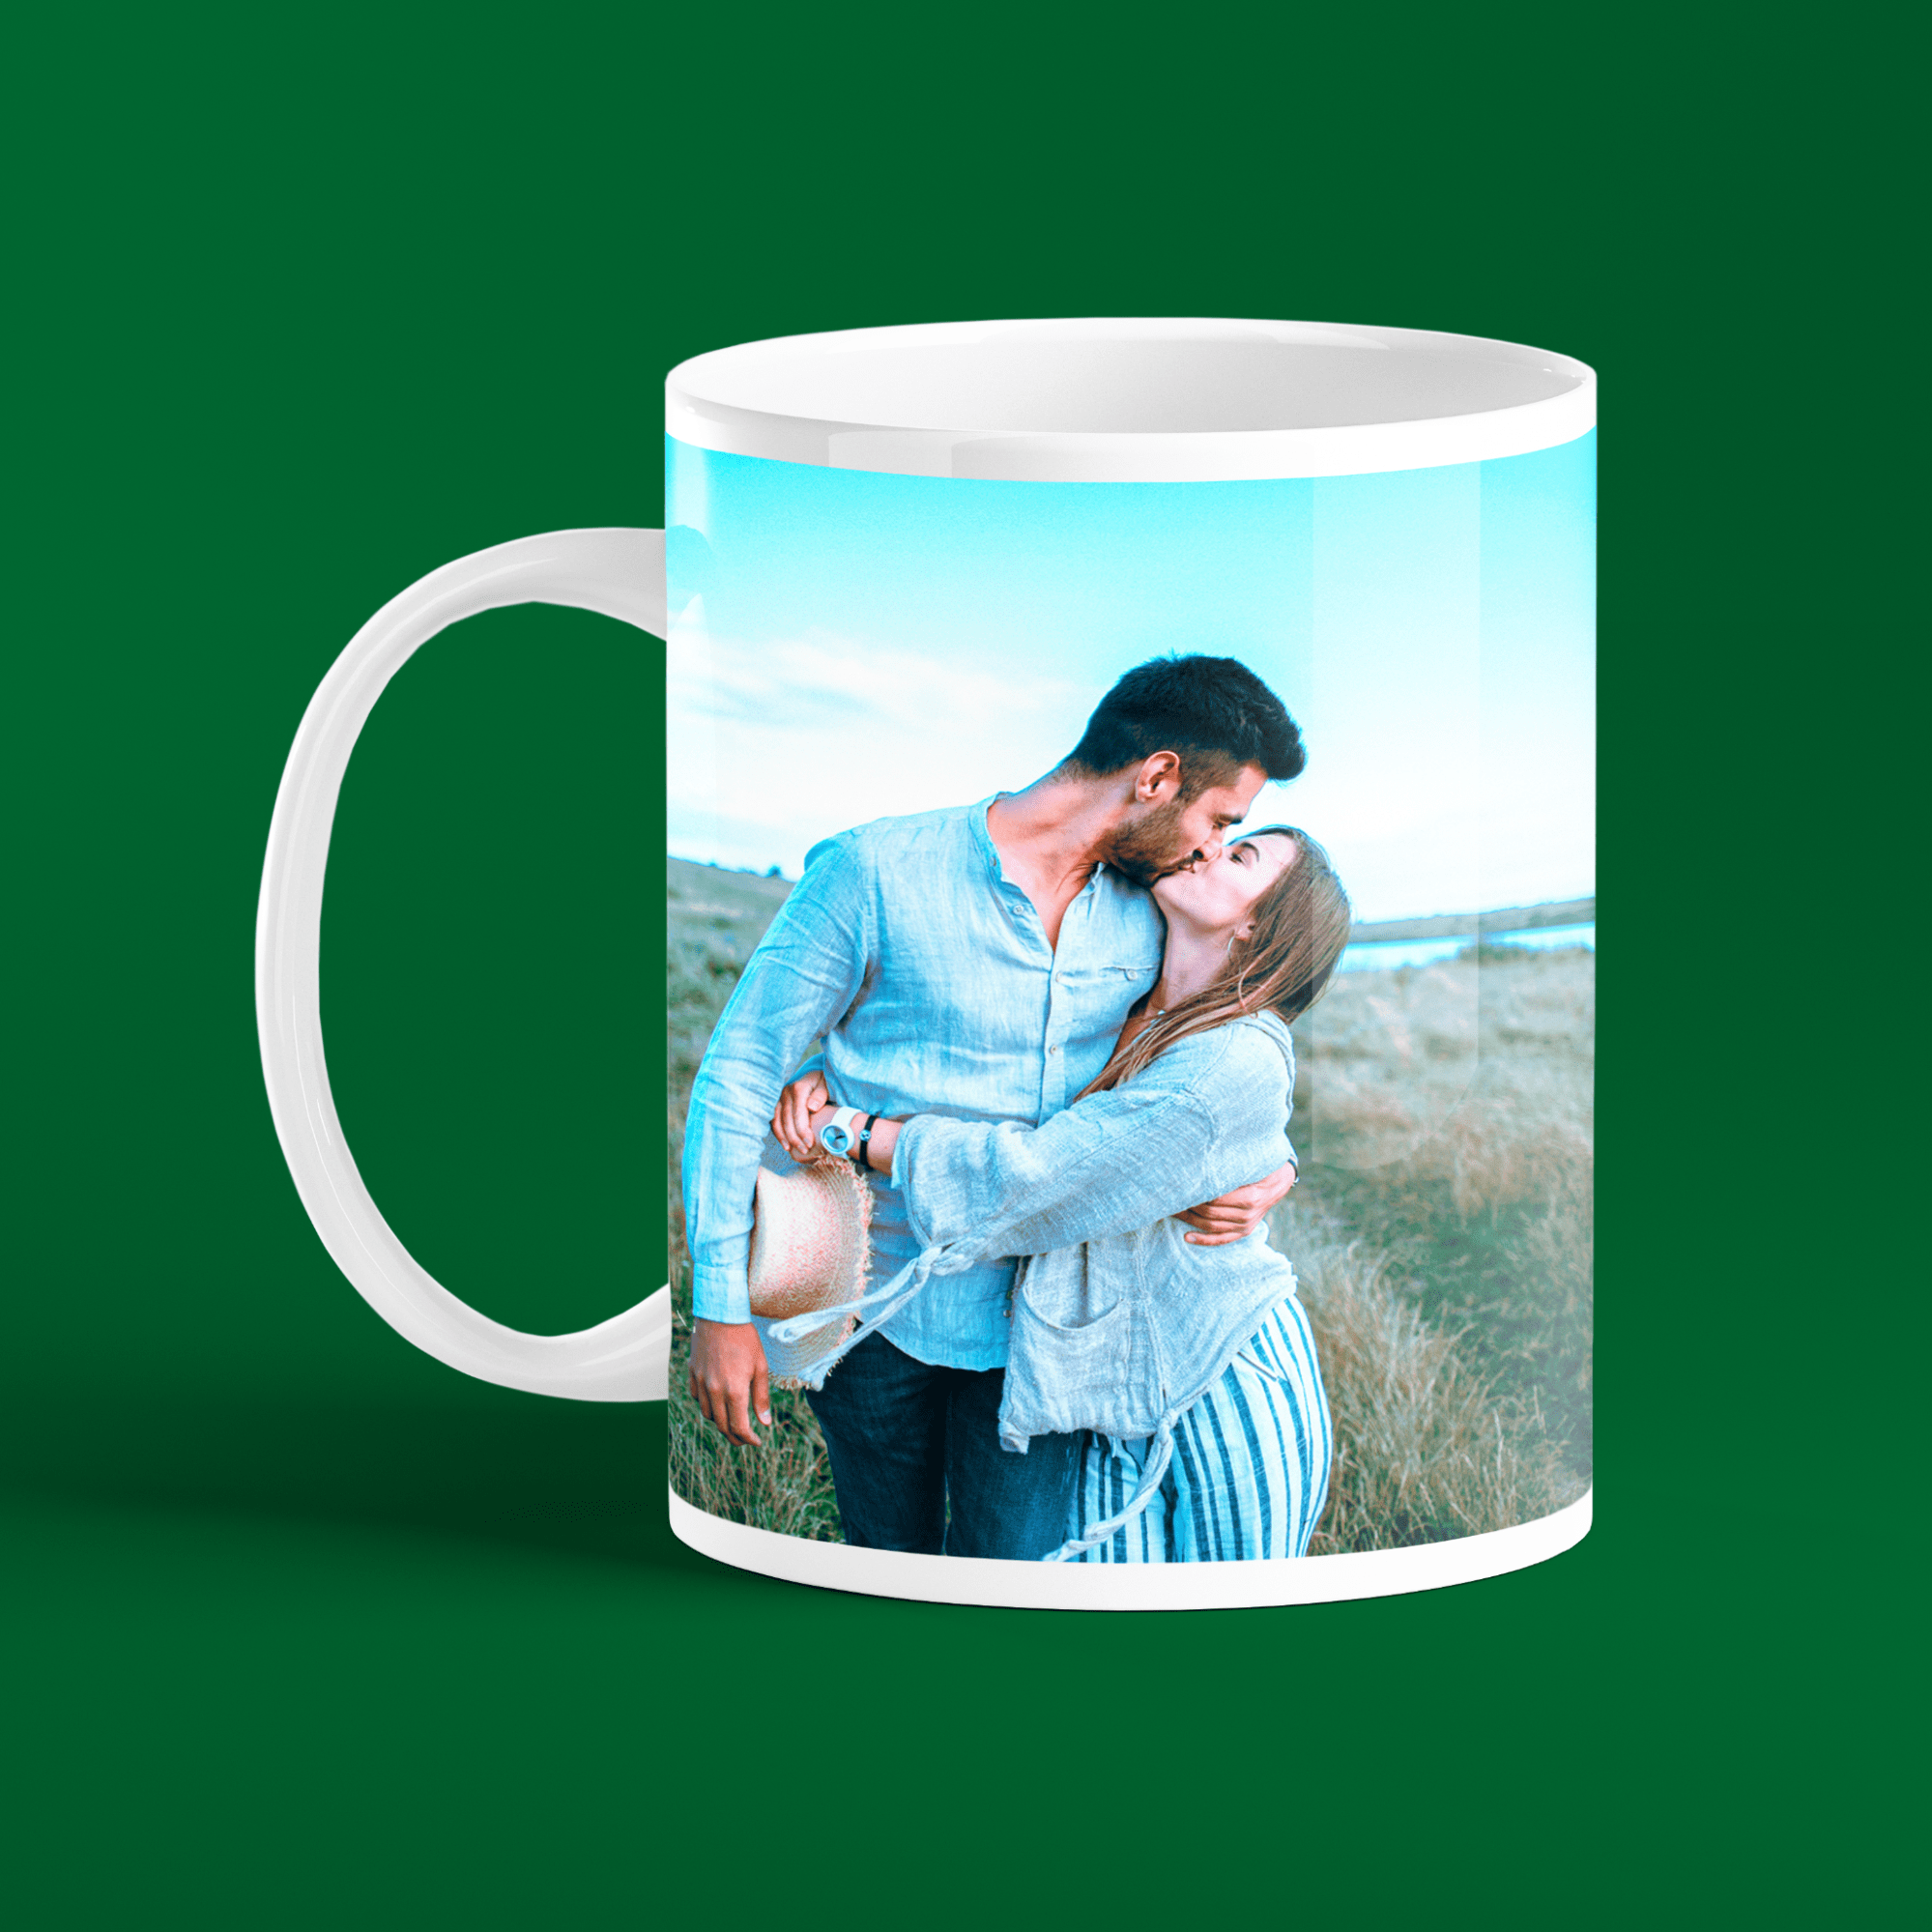 A romantic couple sharing a kiss on a customized photo mug 